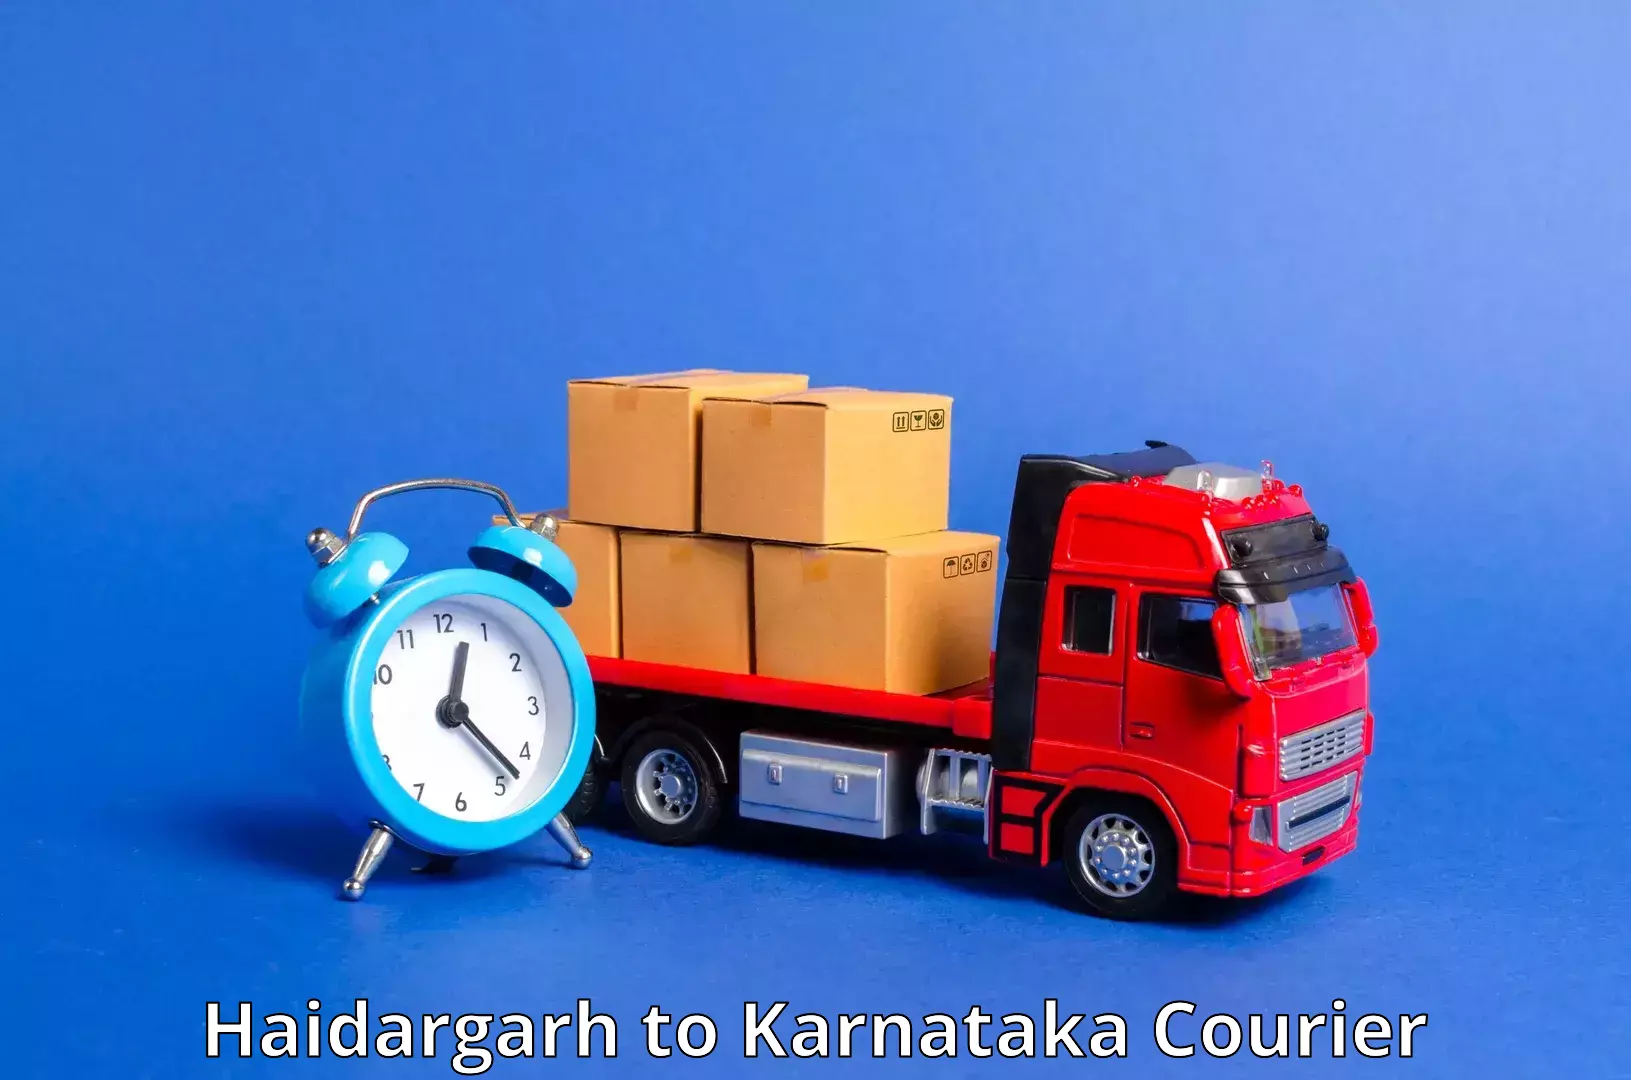 High-speed delivery Haidargarh to Karnataka